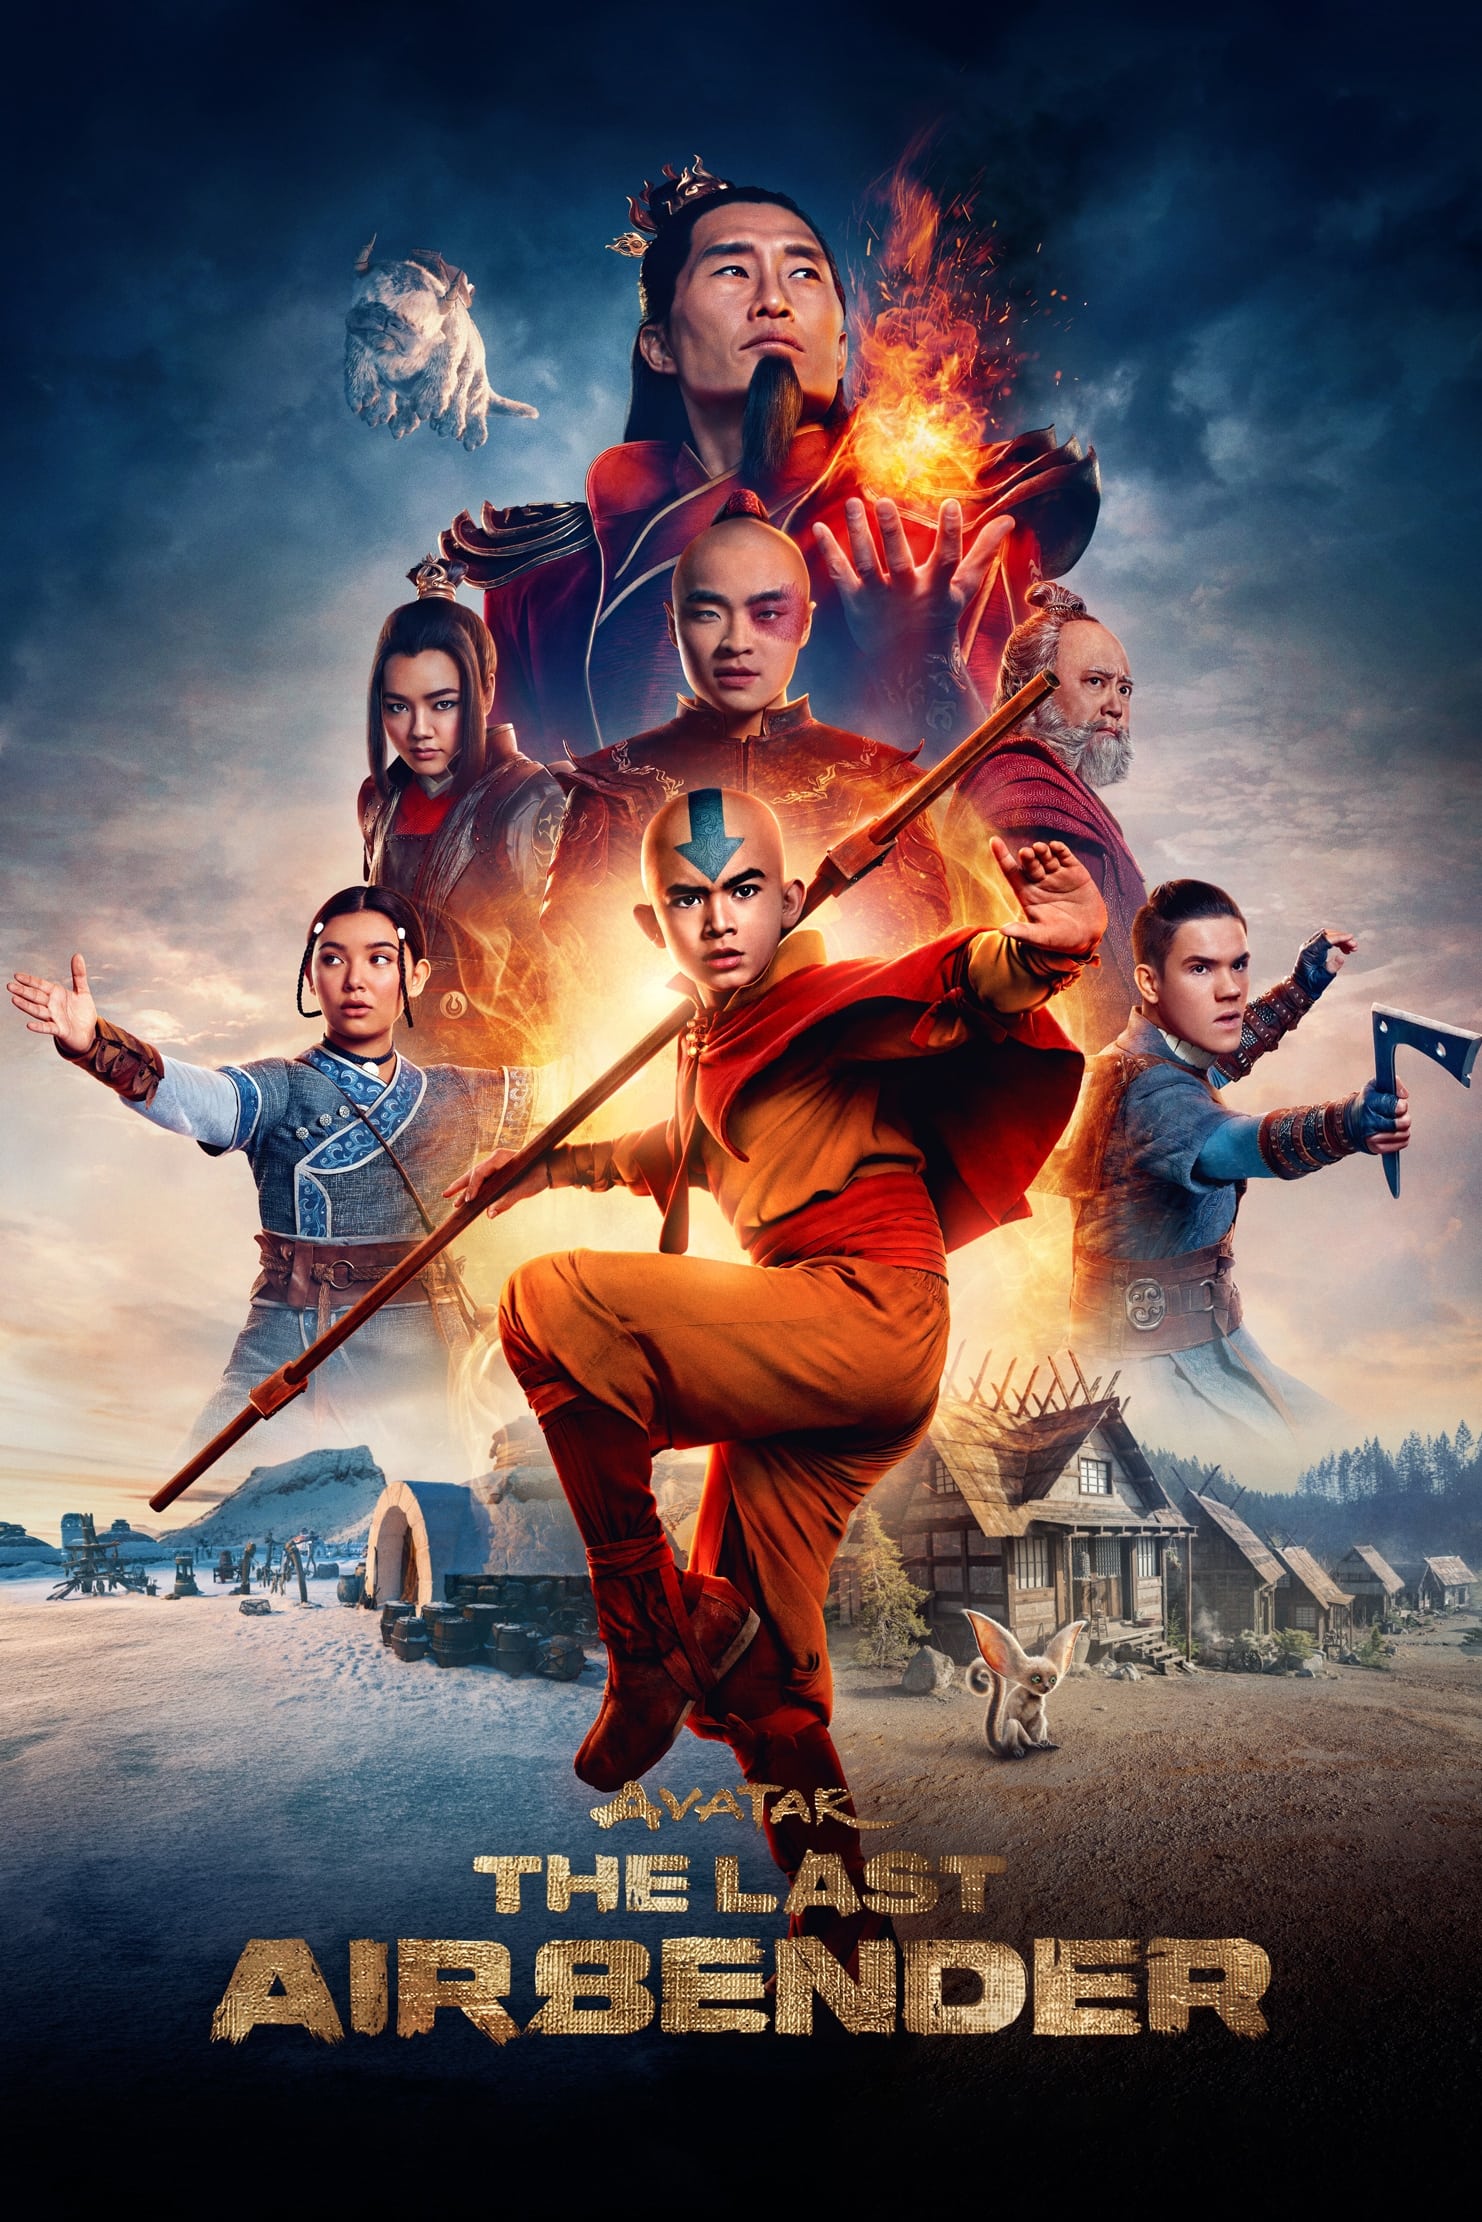 Plakát pro film “Avatar: Legenda o Aangovi”